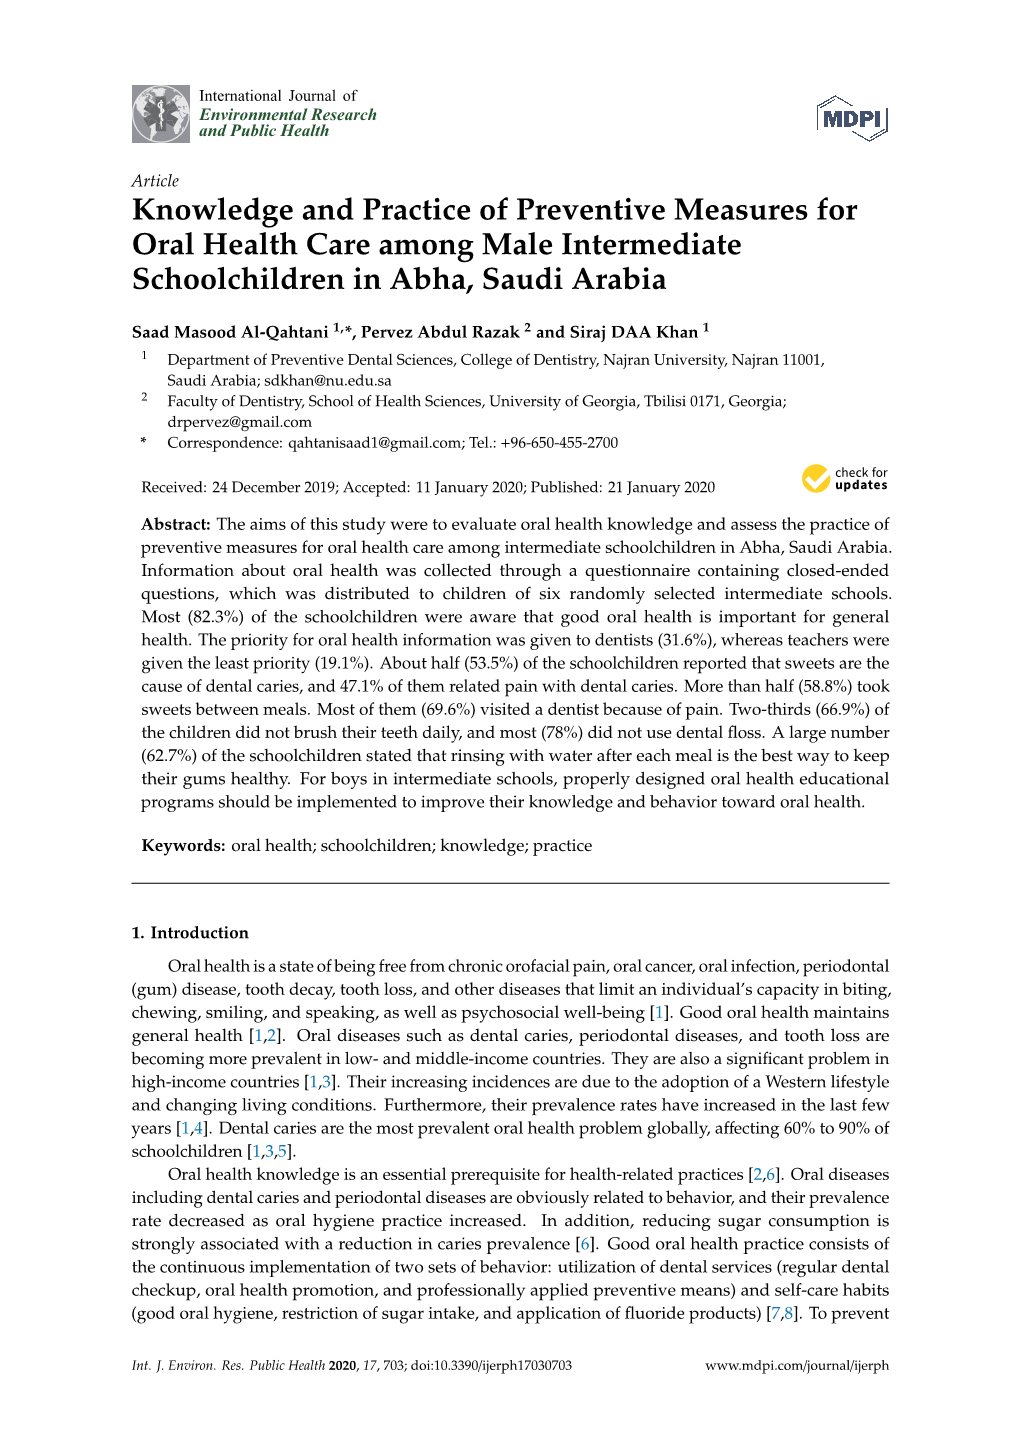 Knowledge and Practice of Preventive Measures for Oral Health Care Among Male Intermediate Schoolchildren in Abha, Saudi Arabia